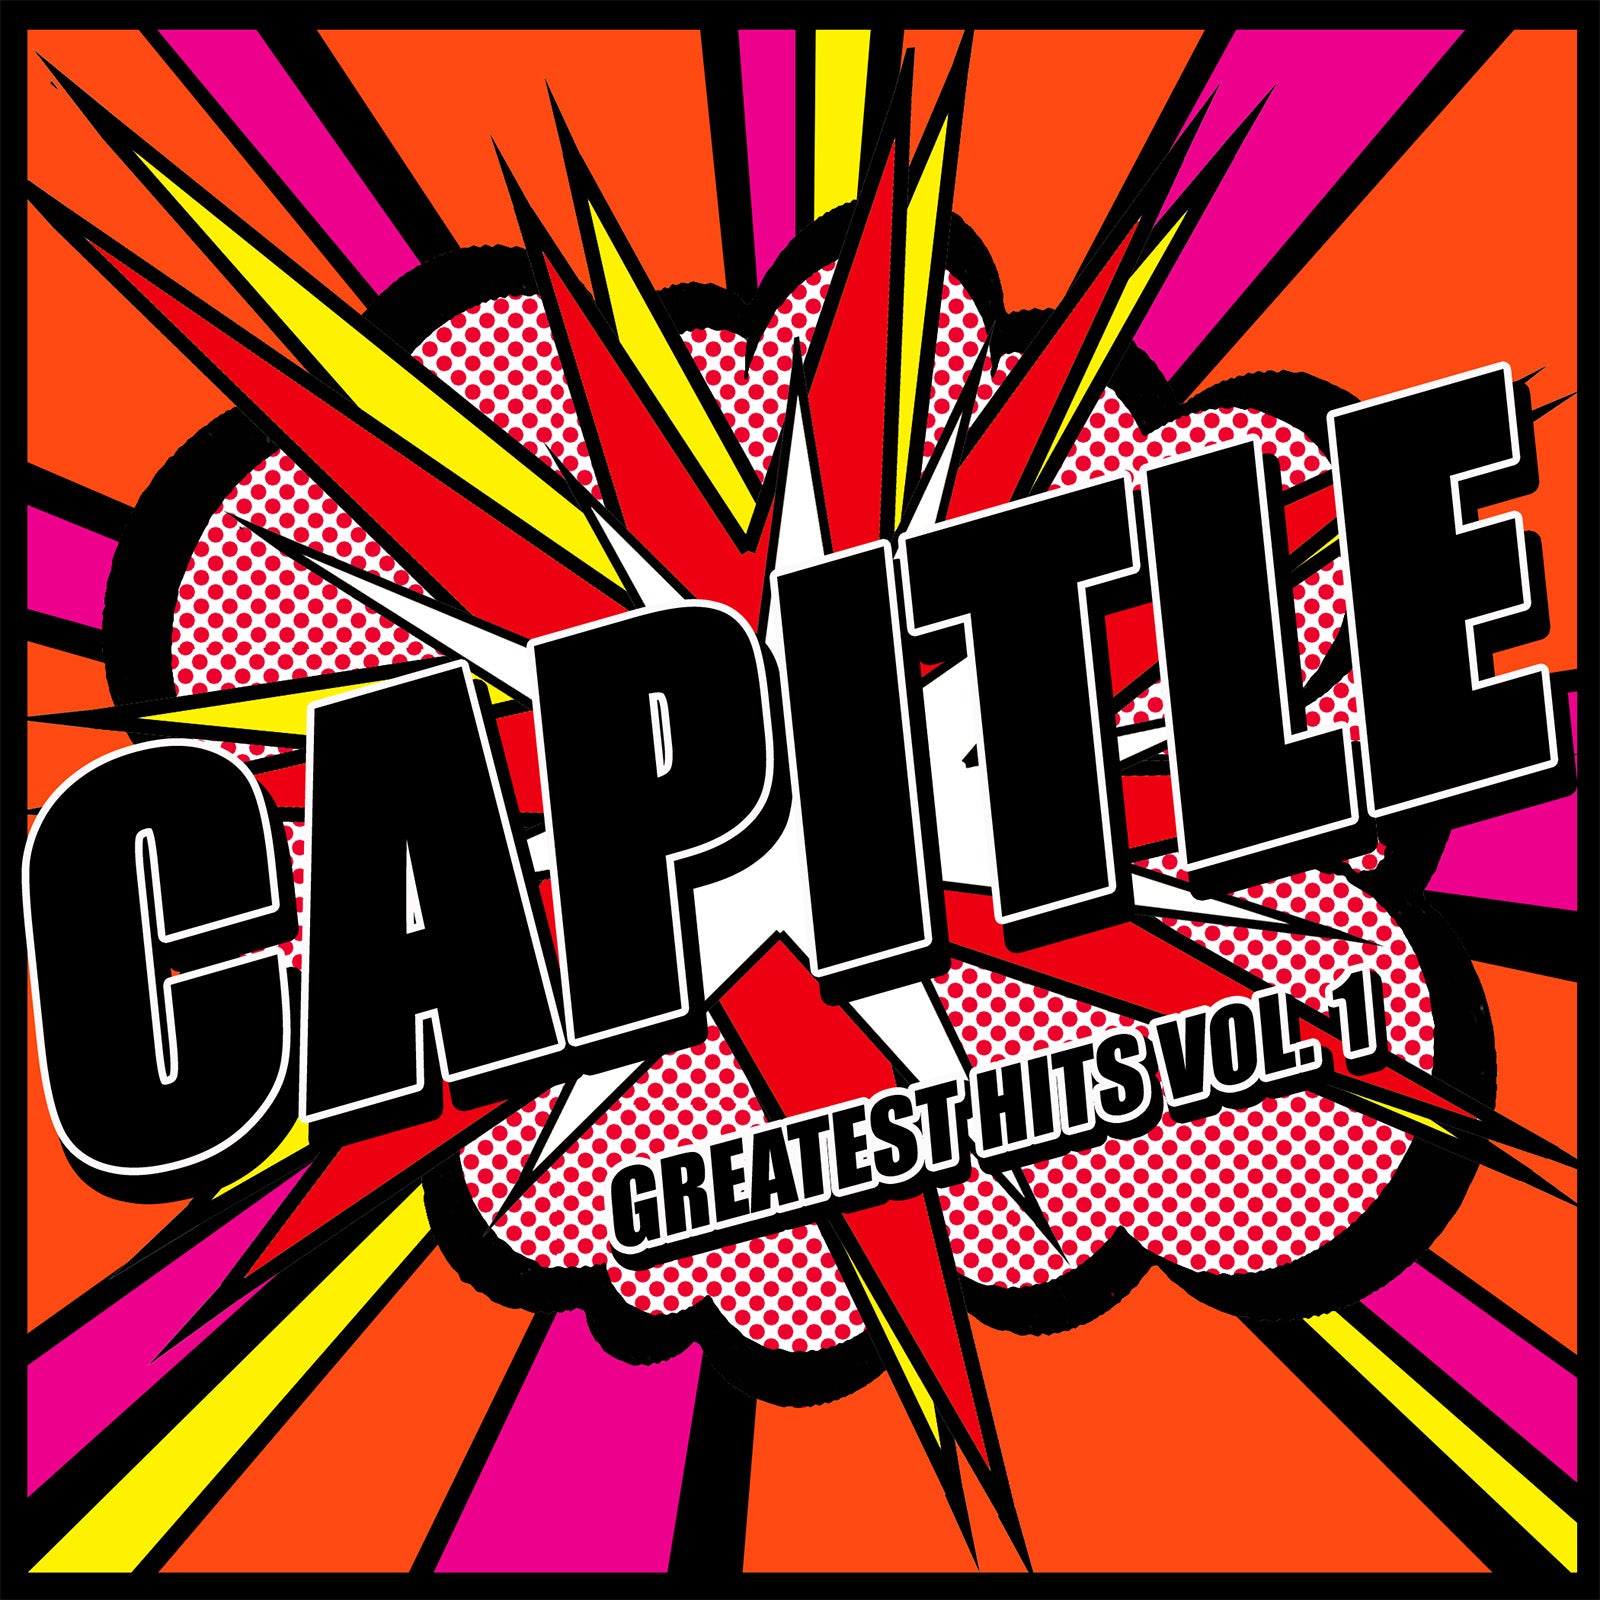 Capitle - Greatest Hits Vol. 1 7" Vinyl